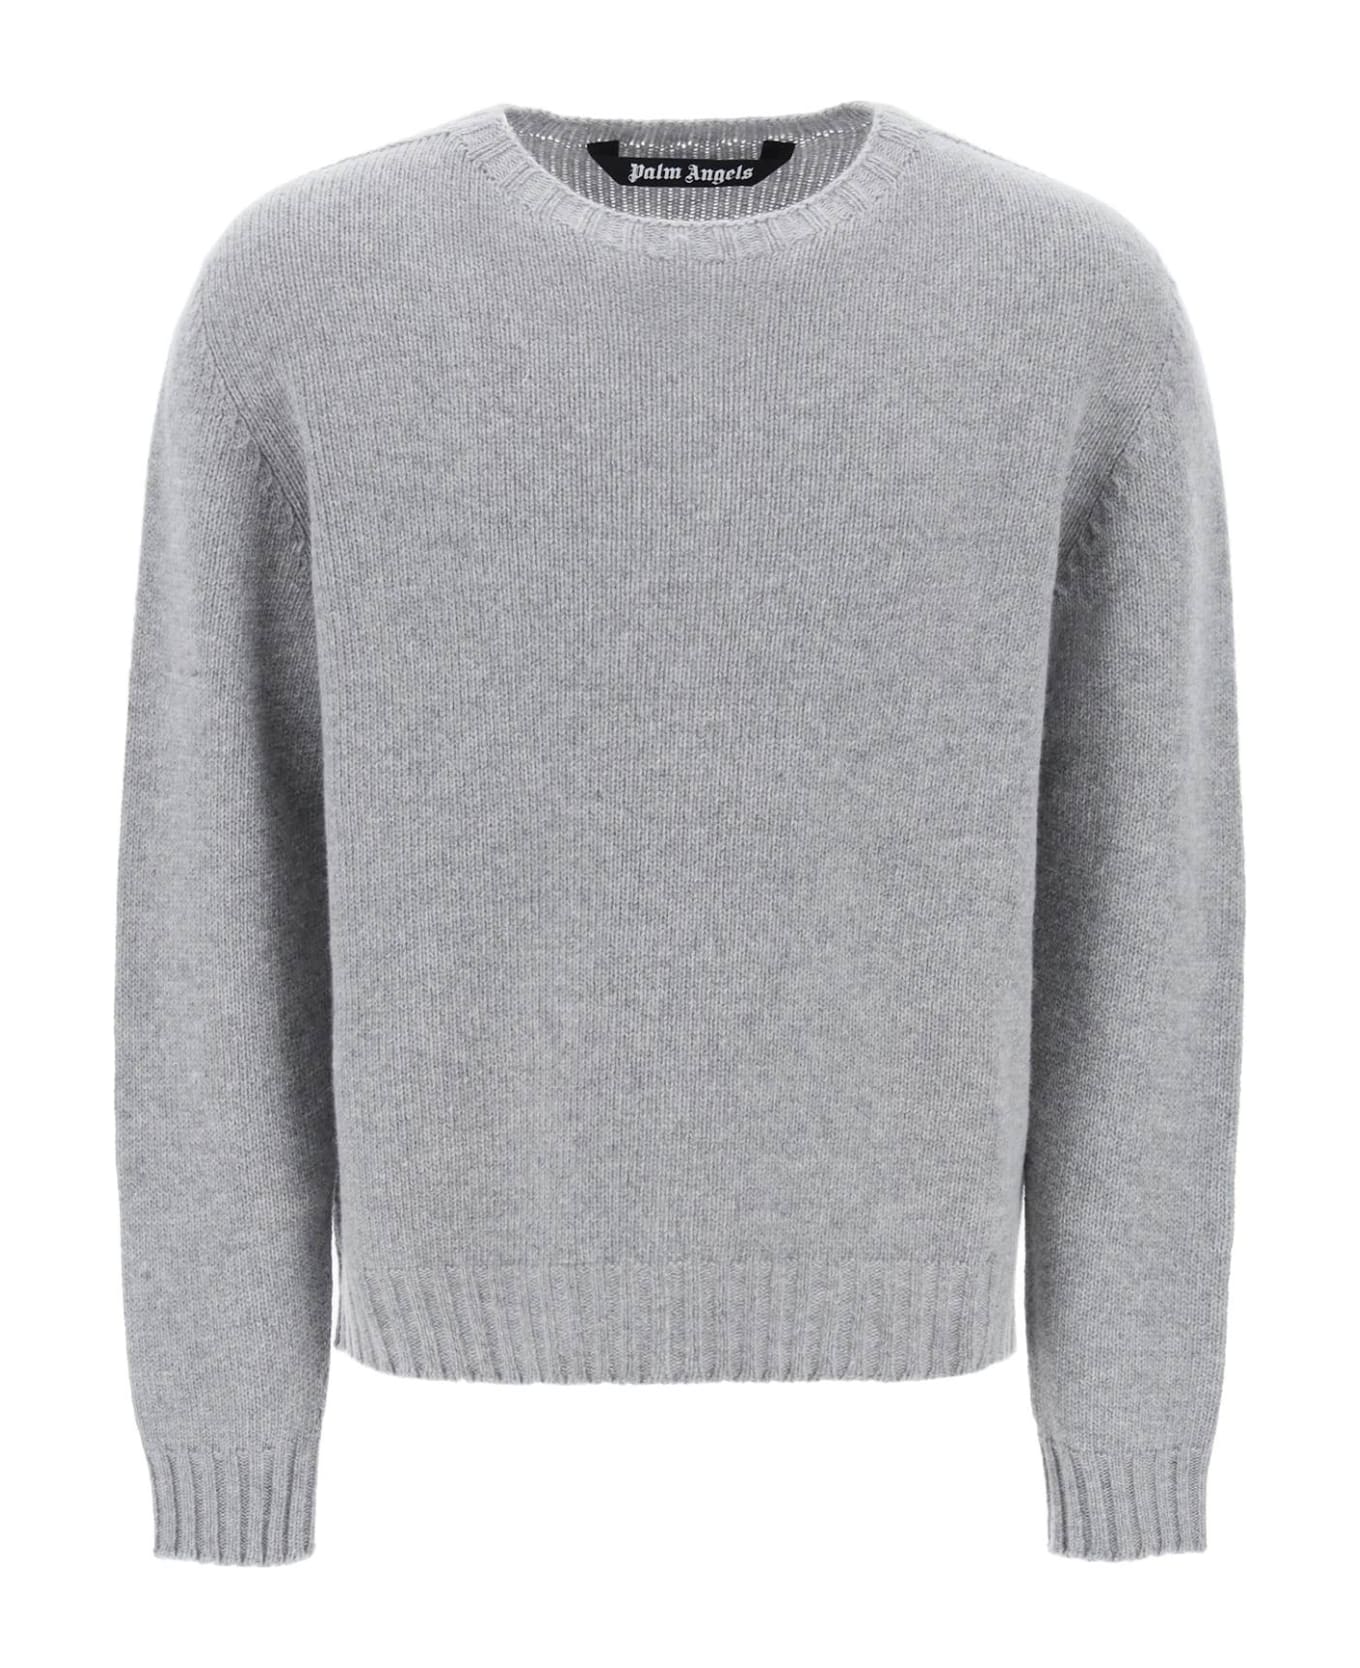 Palm Angels Wool Sweater With Logo Intarsia - MELANGE GREY WHITE (Grey)